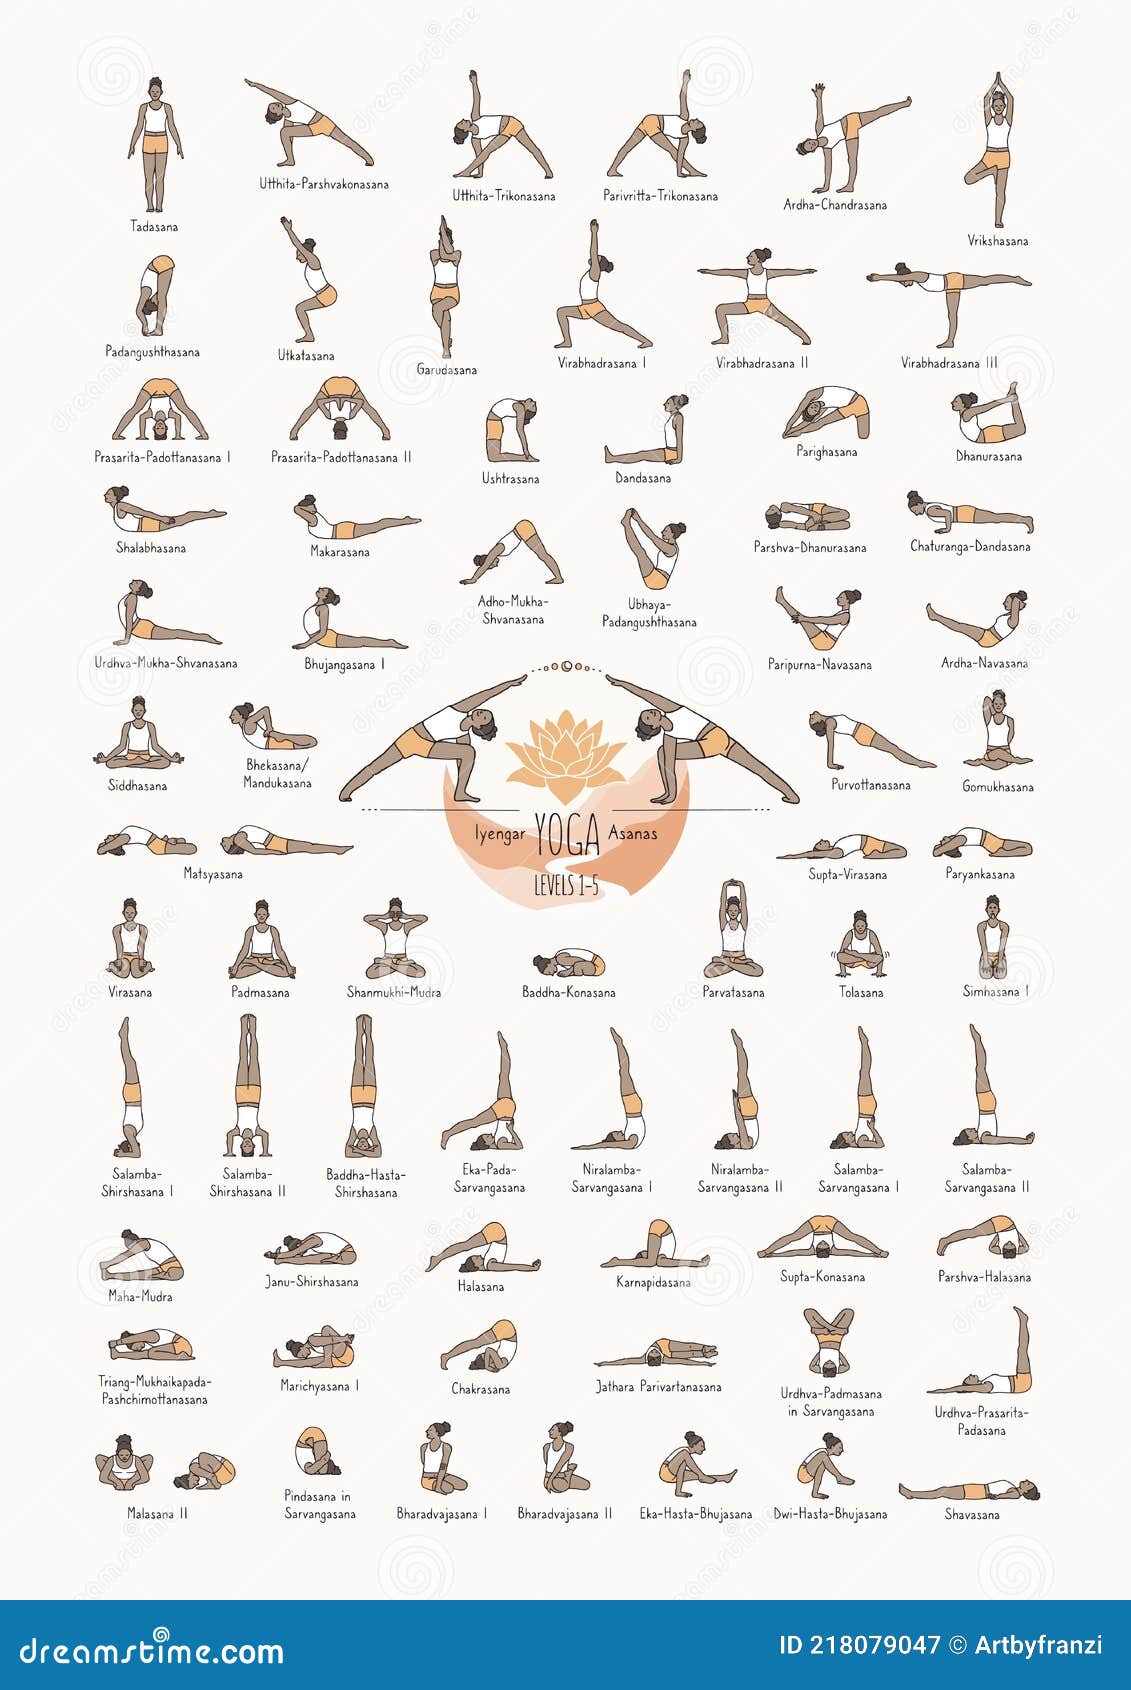 11 Energy Boosting Yoga Poses | YouAligned.com